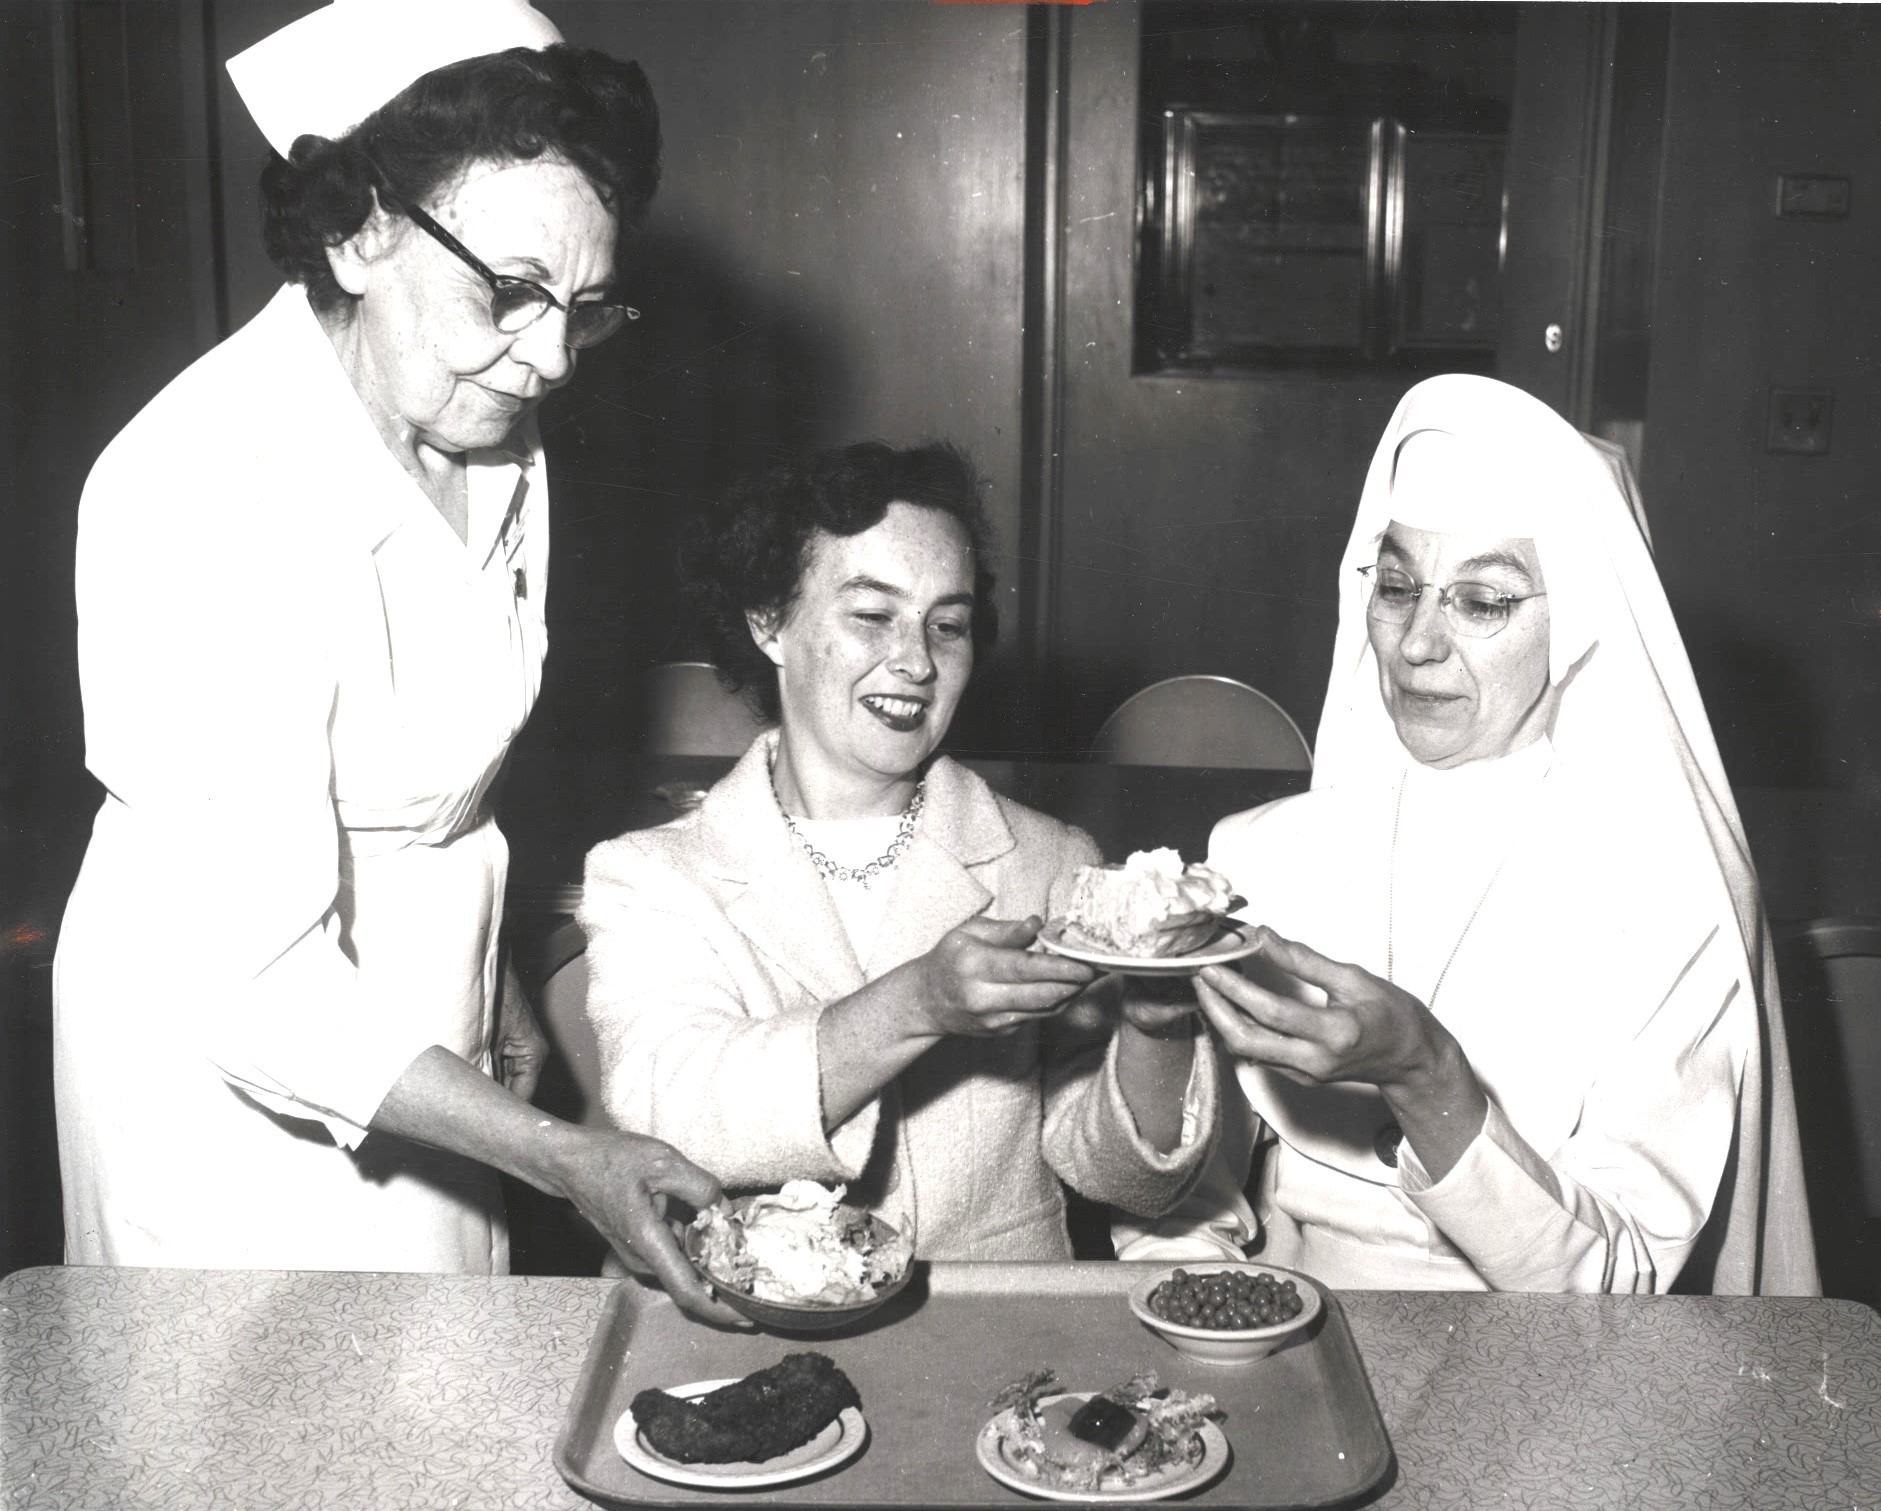 A nurse, nun and businesswoman examine food.